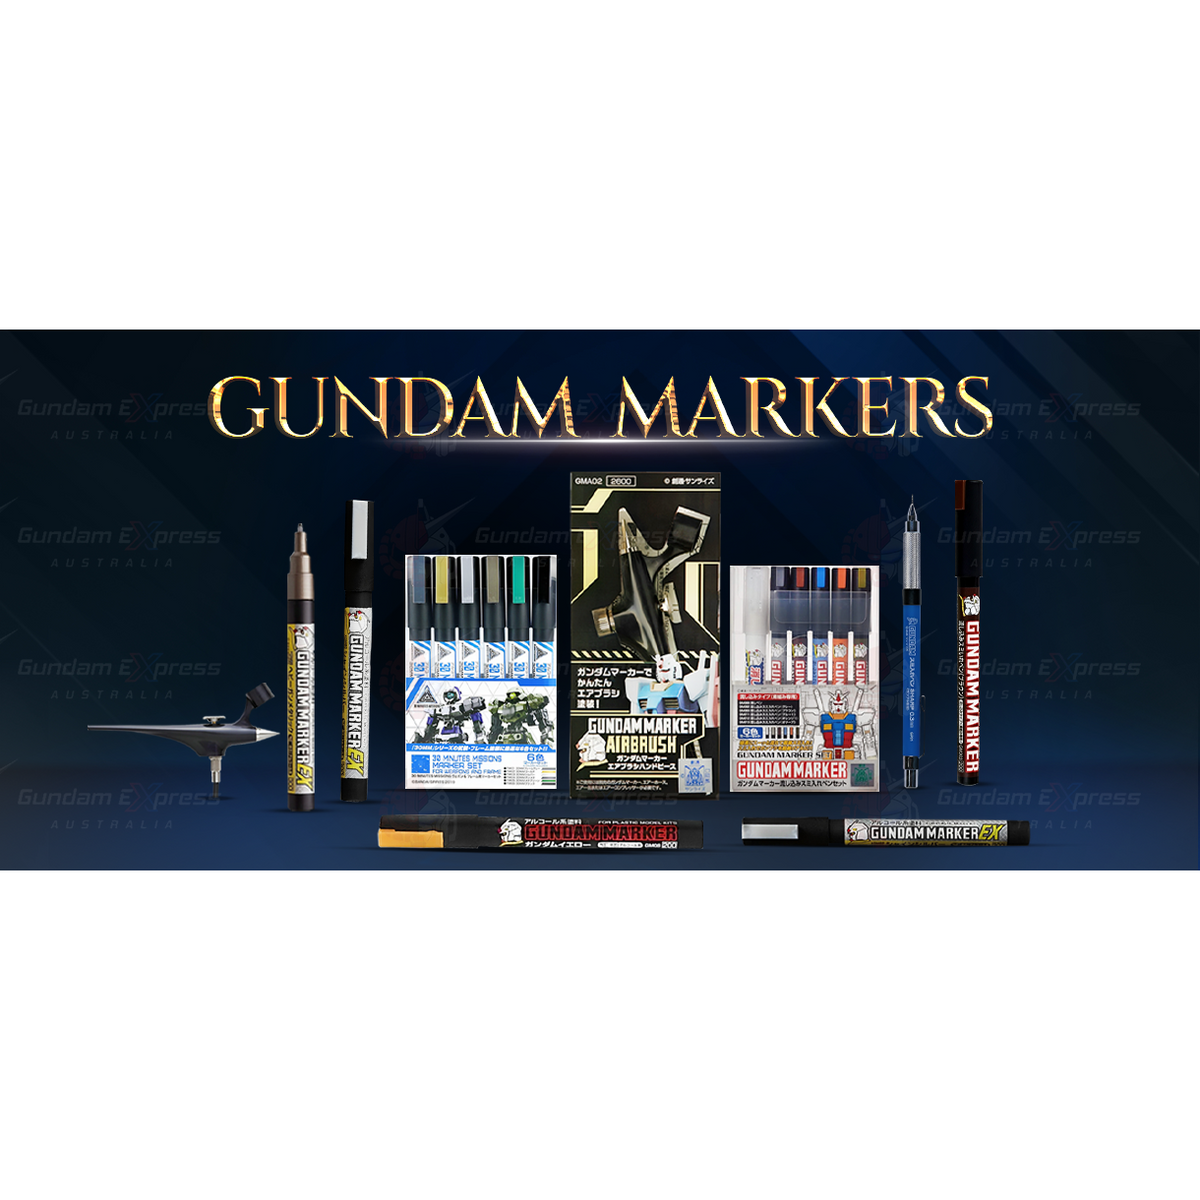 Shop For Gundam Markers at Gundam Express Australia